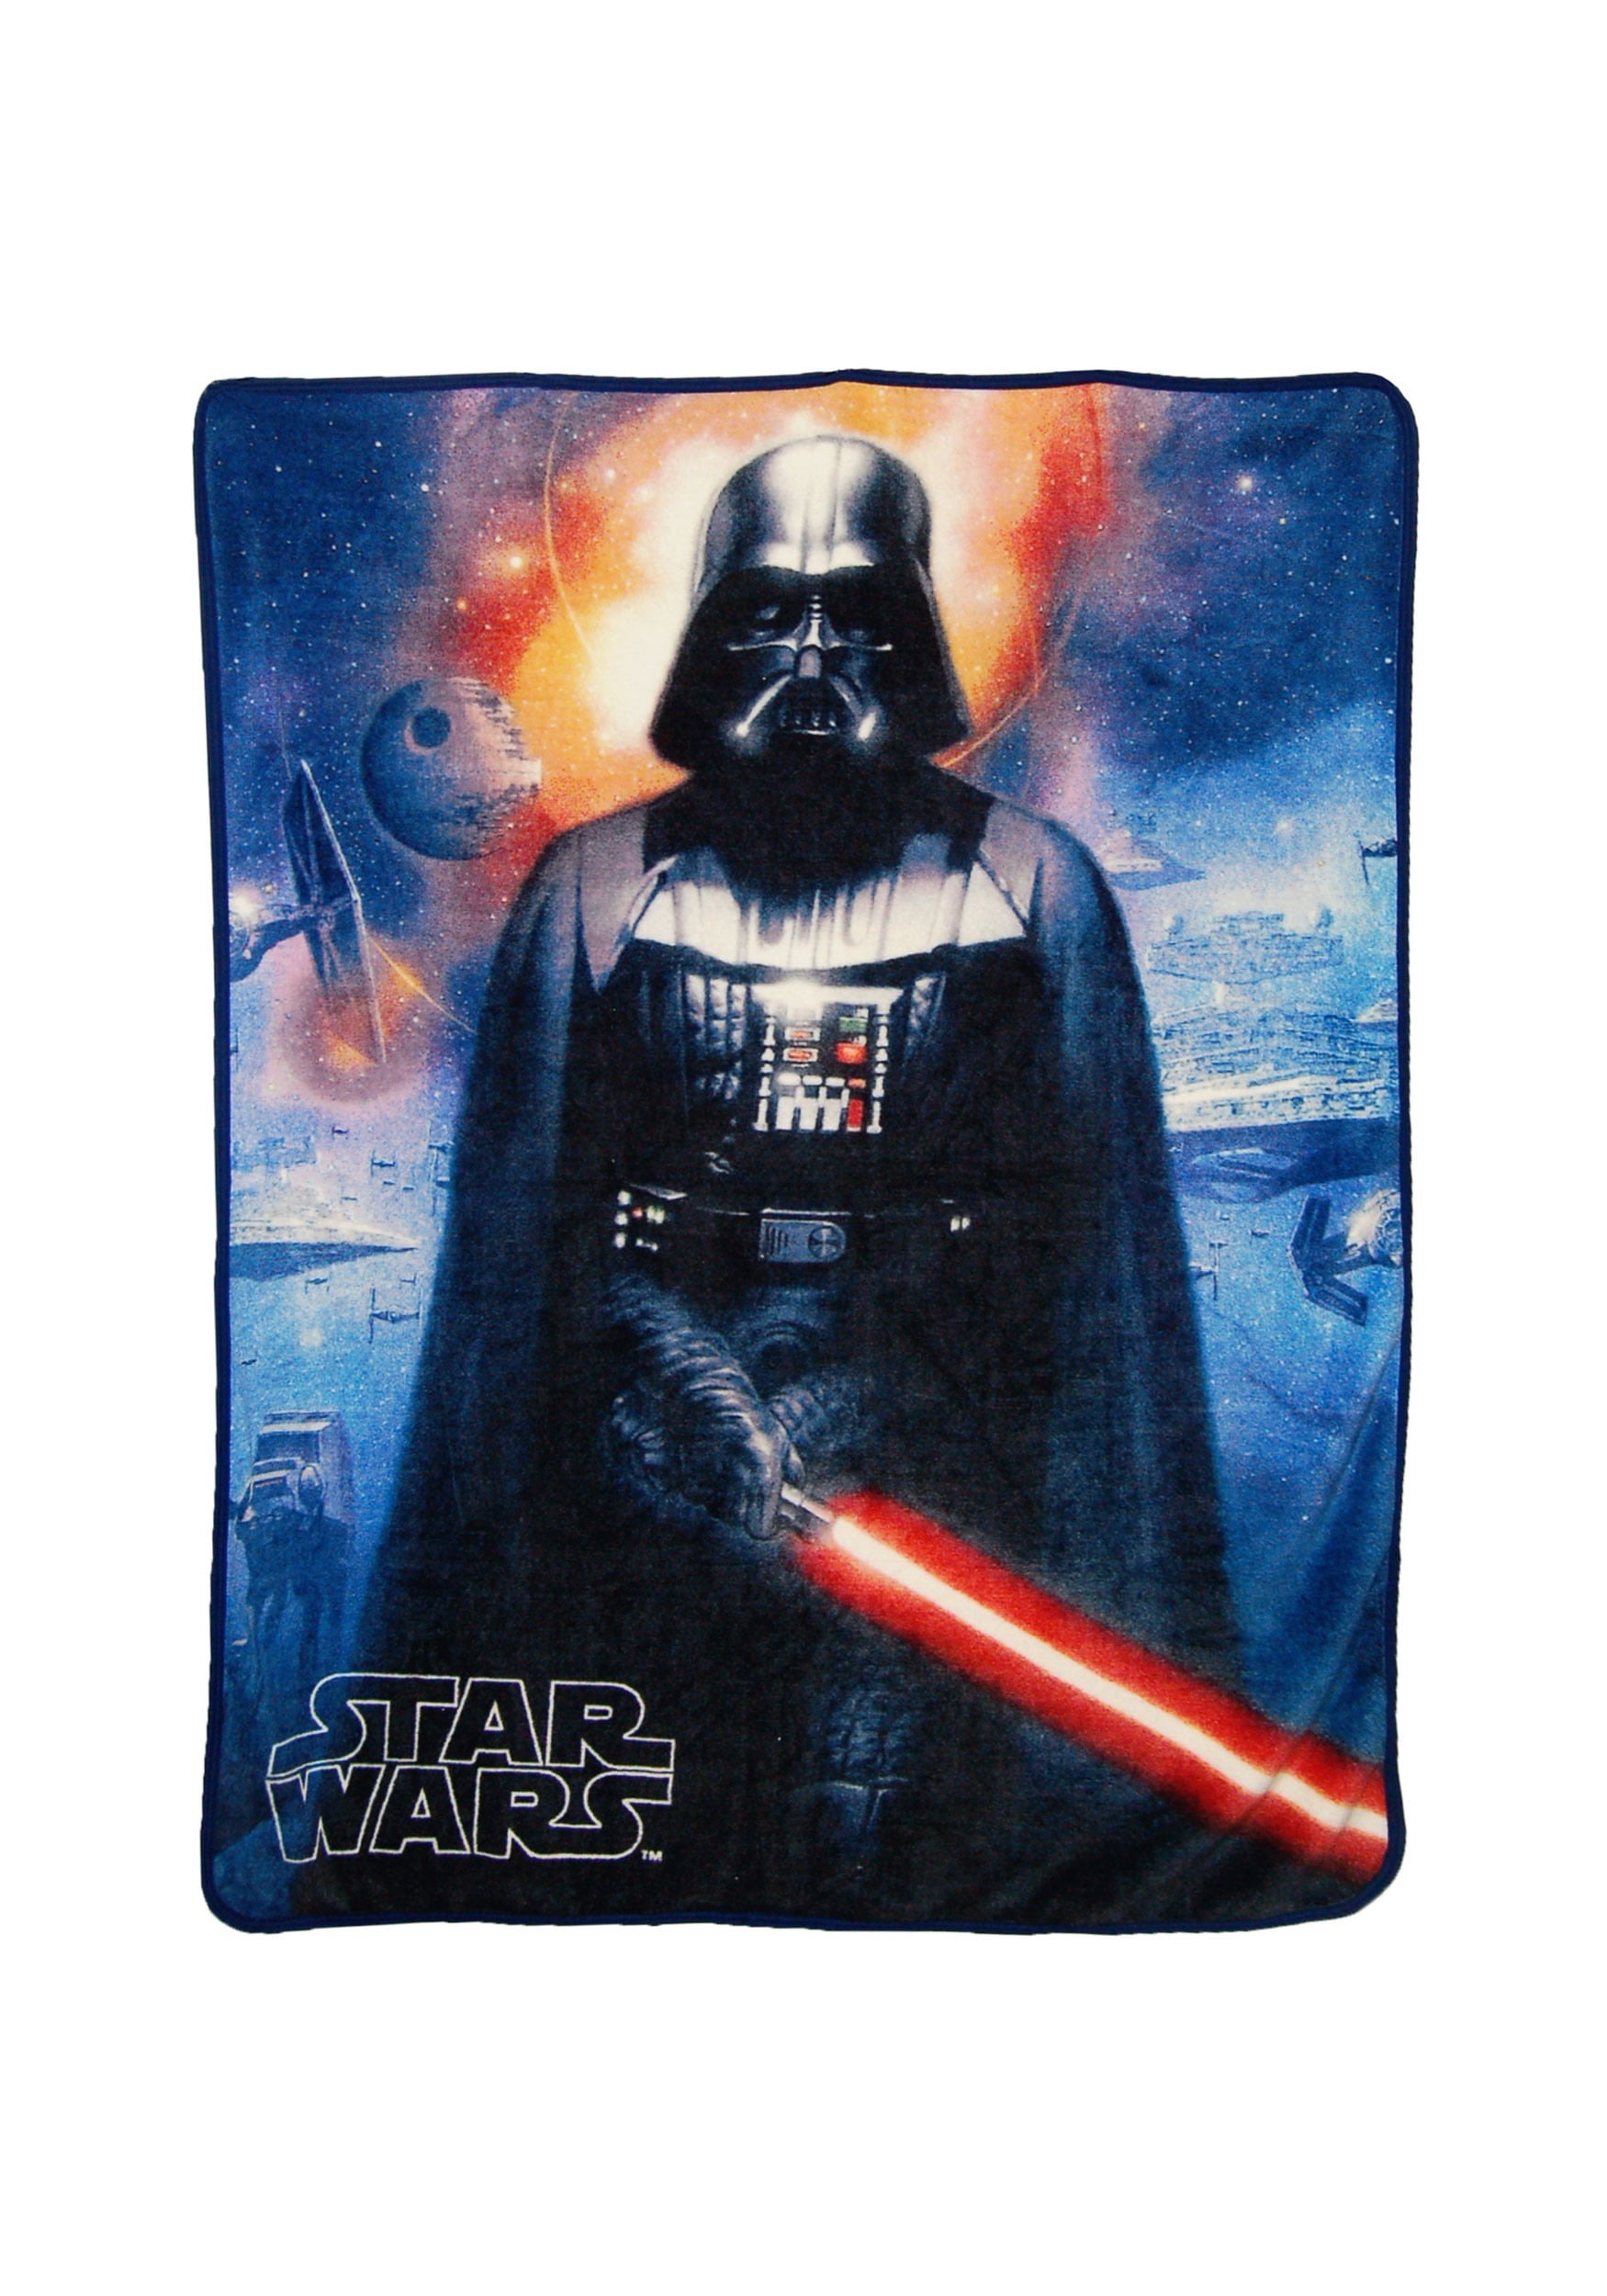 Star Wars Cosmic Darth Vader Super Soft Blanket - Walmart.com